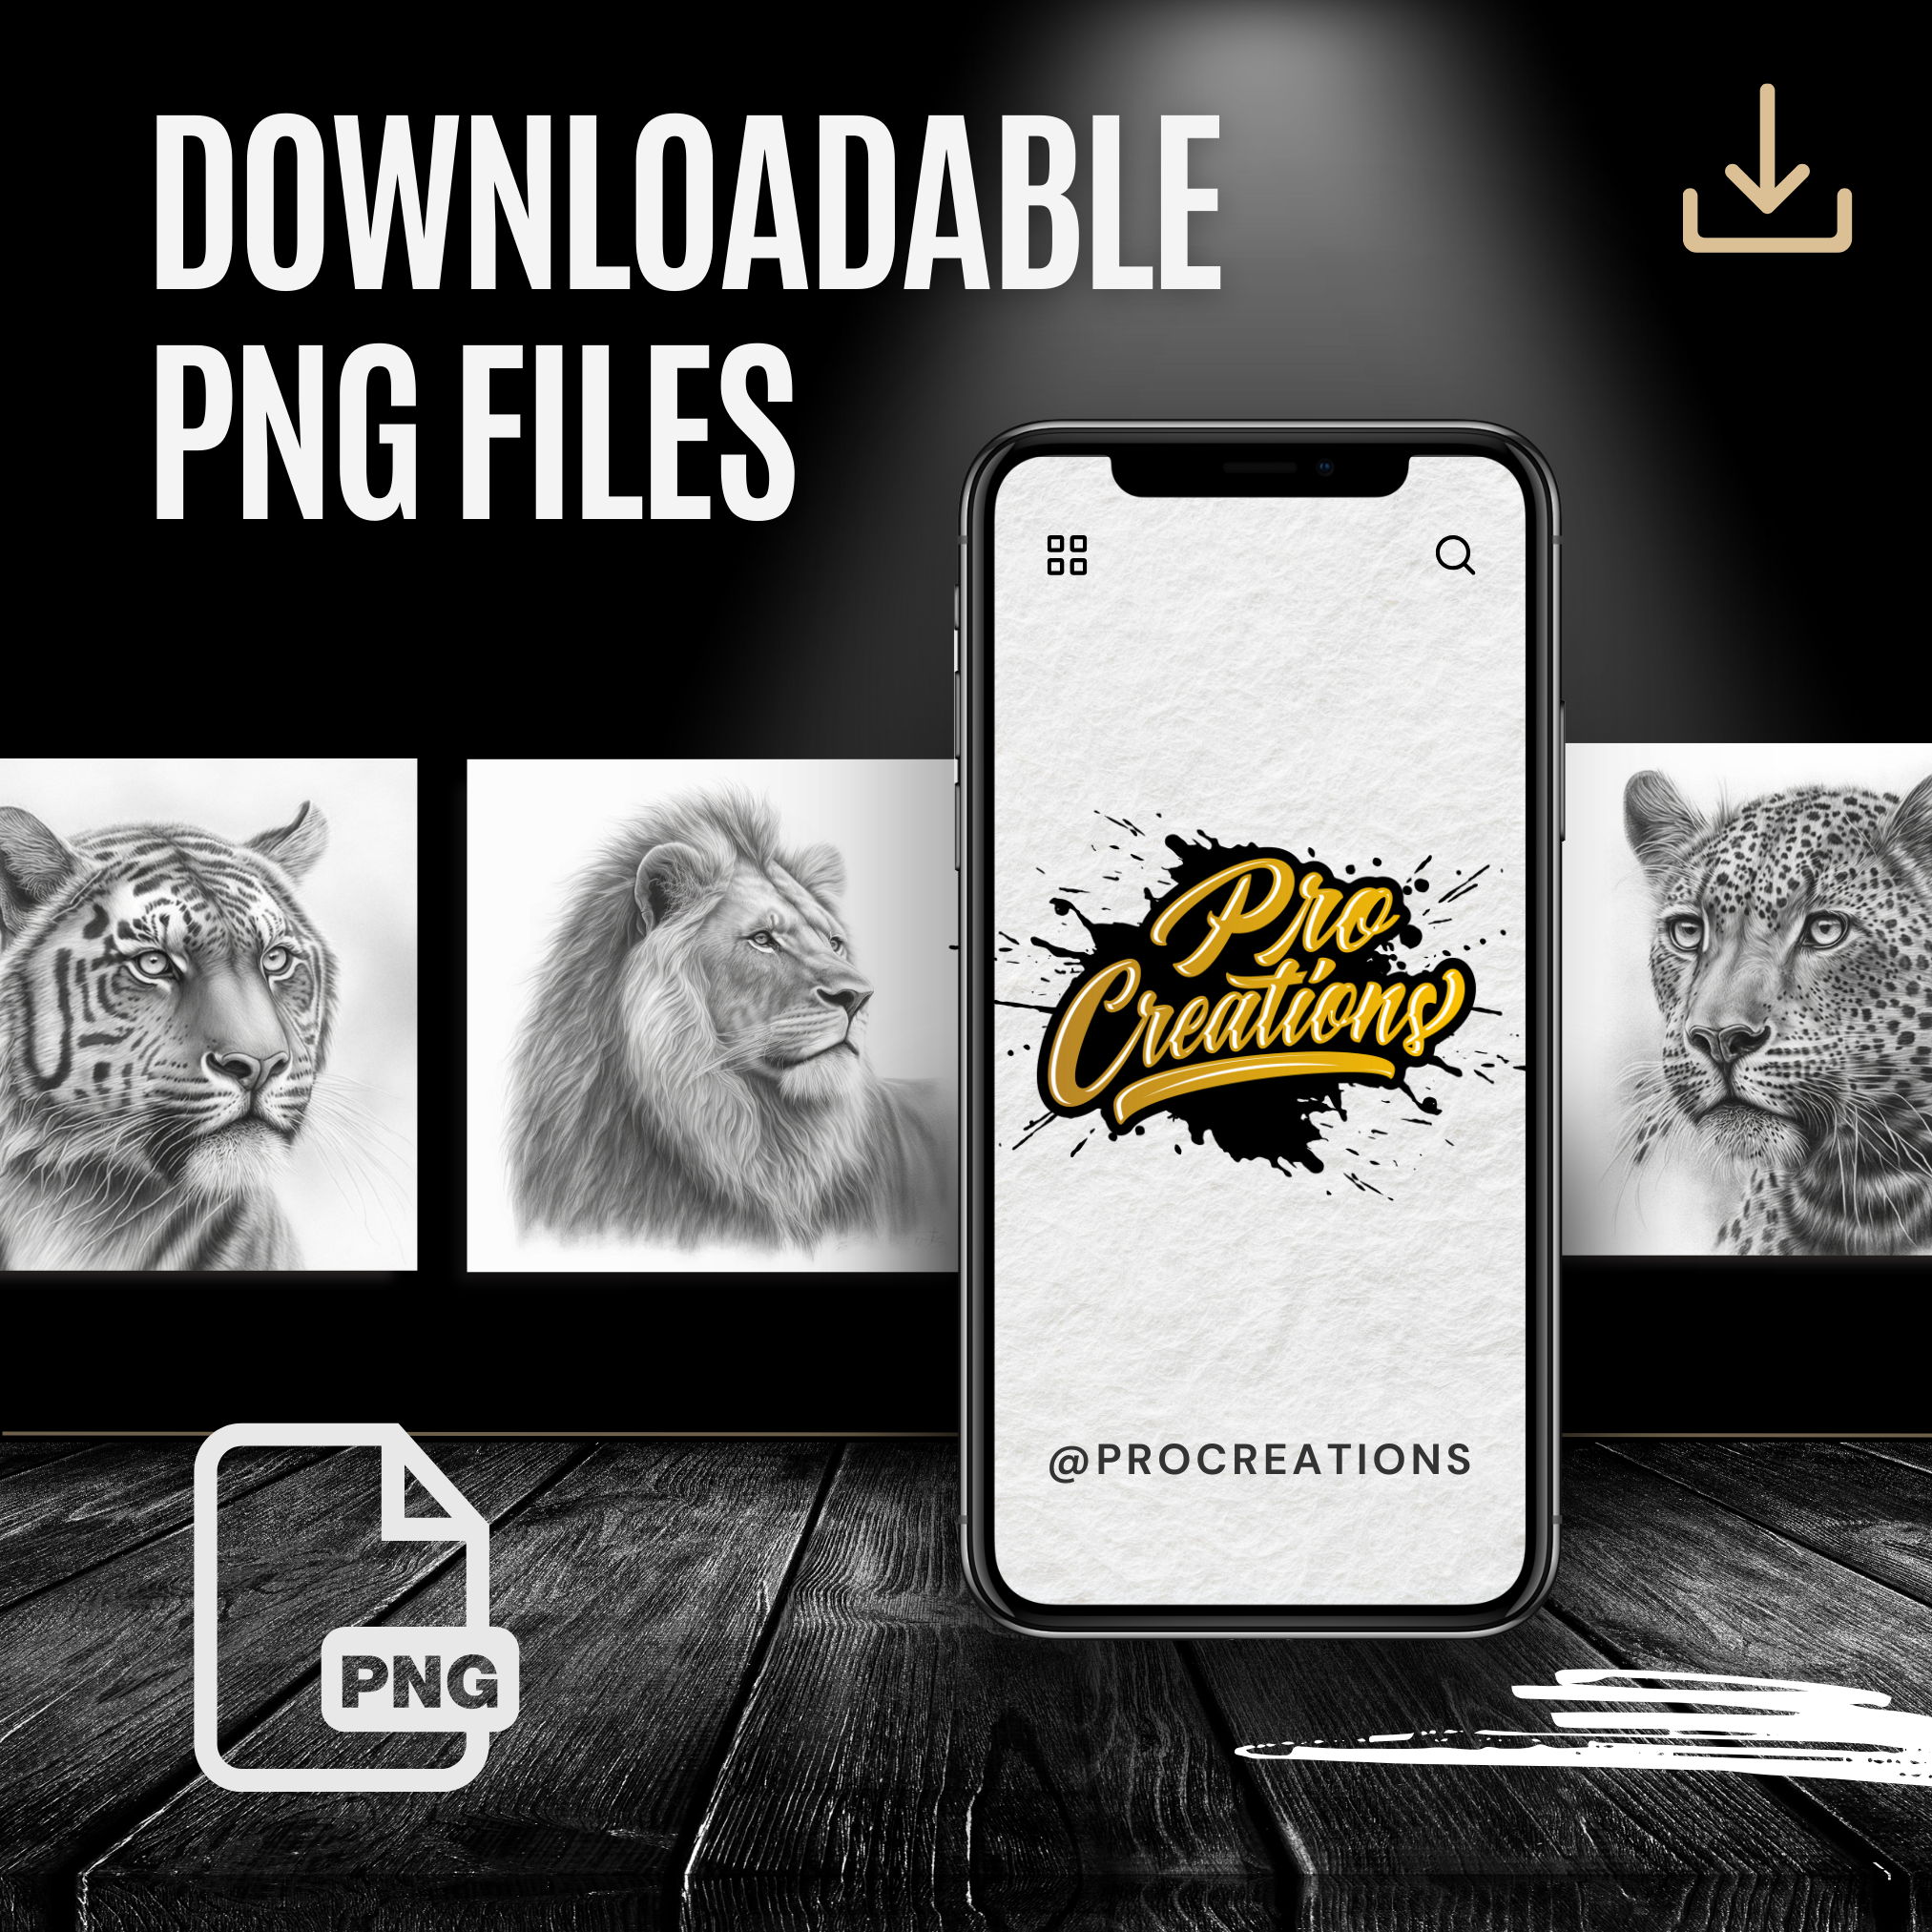 Big Cats Digital Reference Design Collection: 100 Procreate & Sketchbook Images